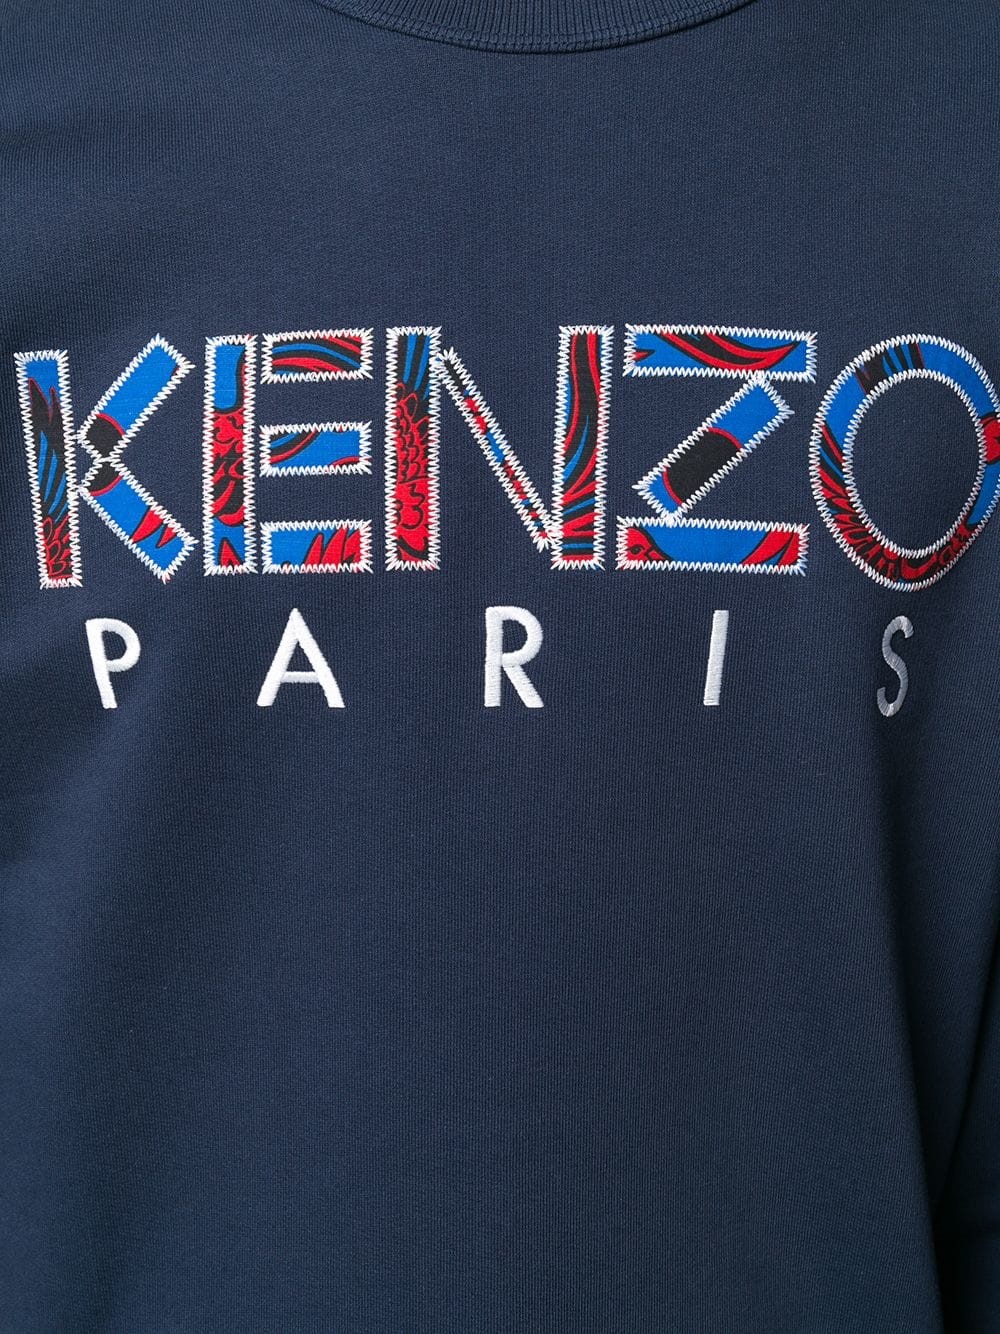 kenzo usa online store